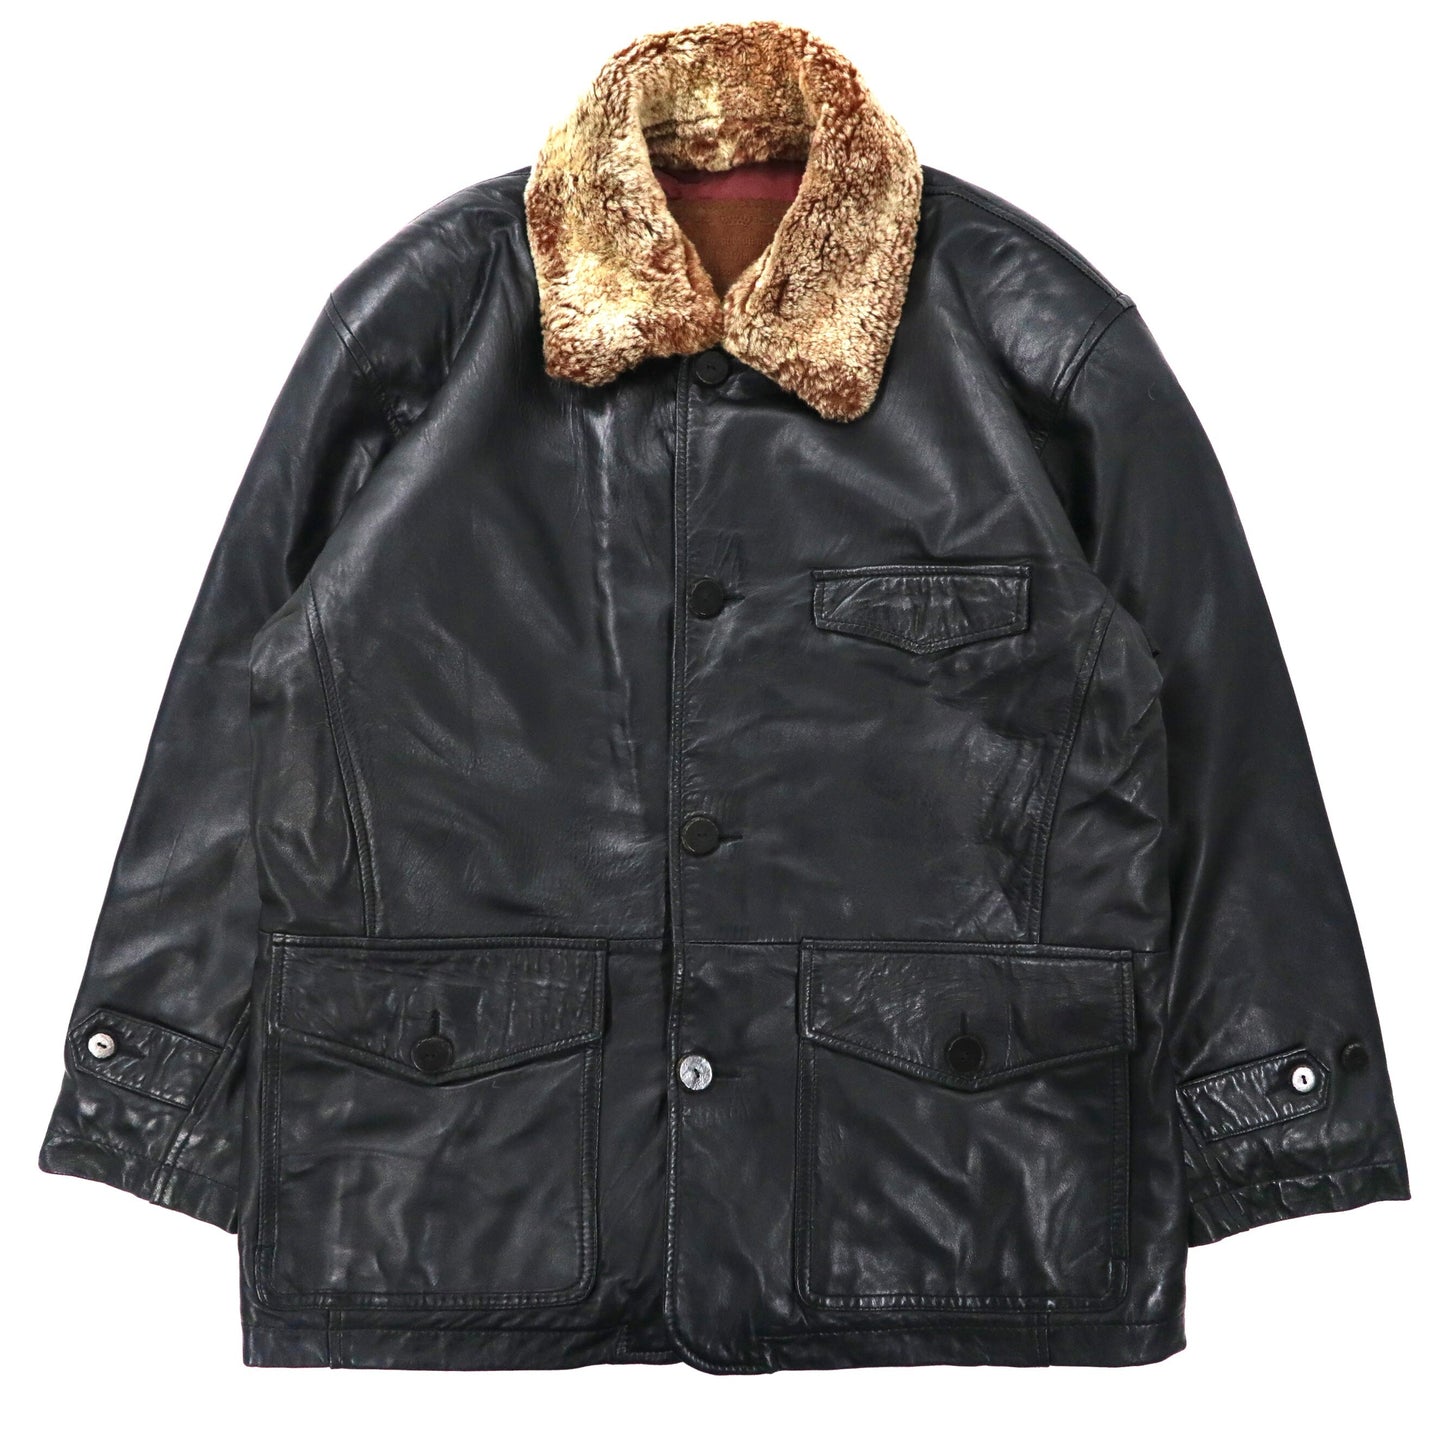 Boa Leather Coat 襟ボア レザーコート M ブラック ラムレザー 羊革 ボア着脱式 ビッグサイズ Karrsa